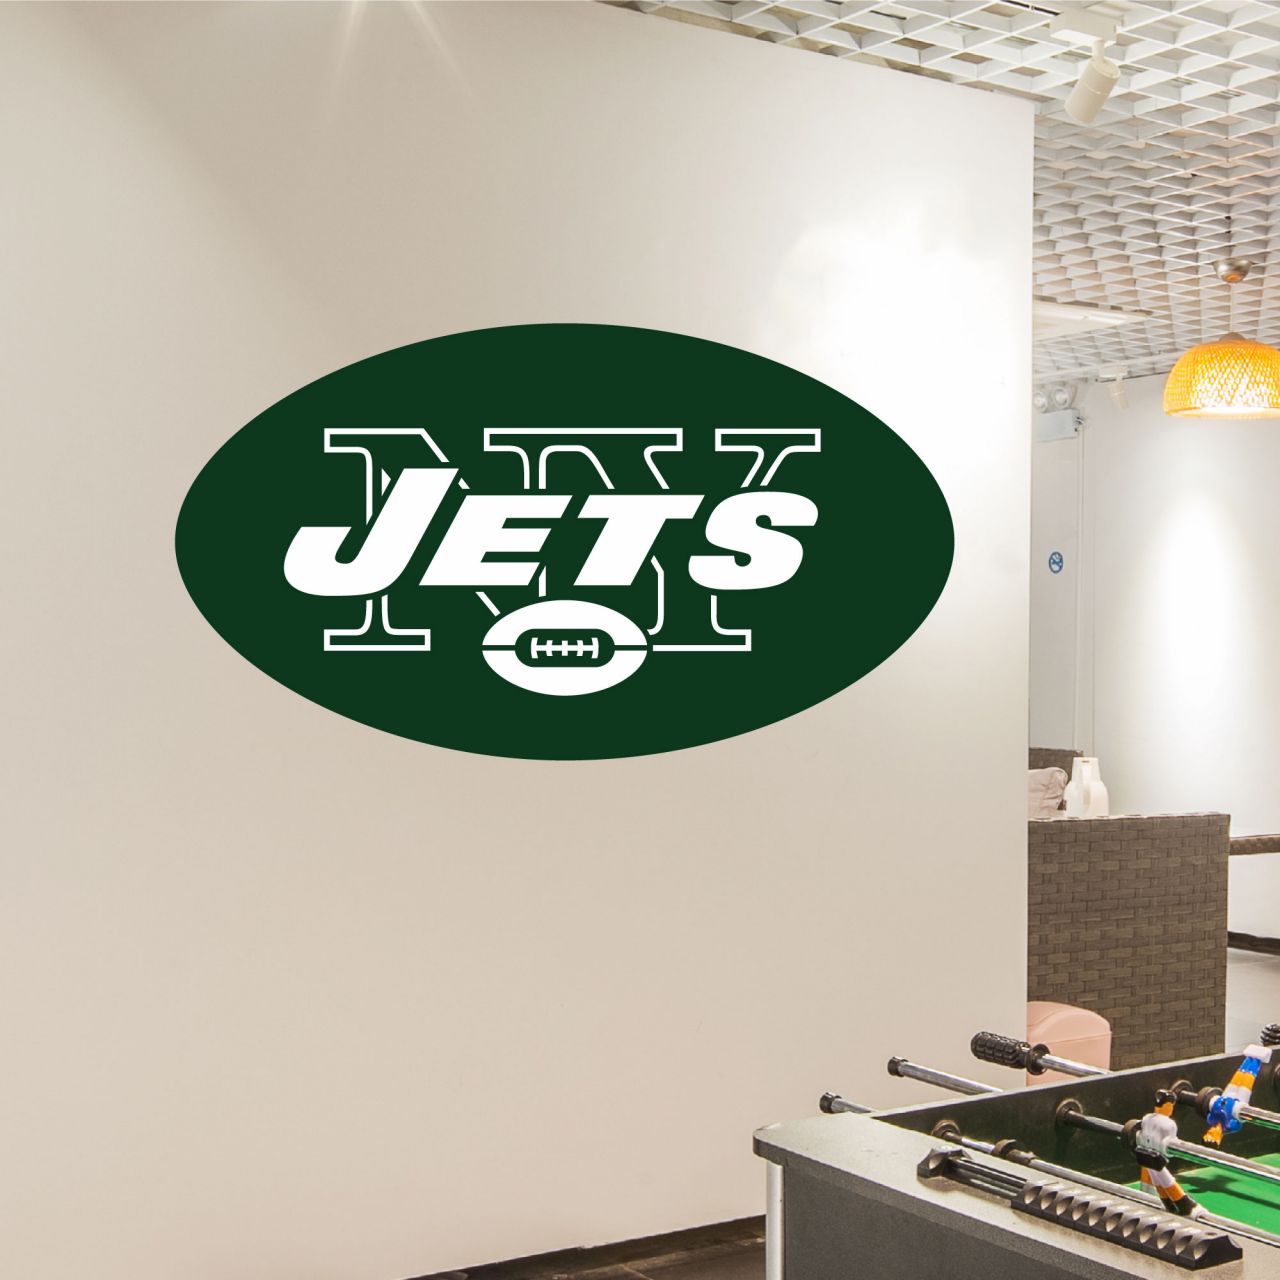 Sports Team Wall Decal - New York Jets Football Team Logo